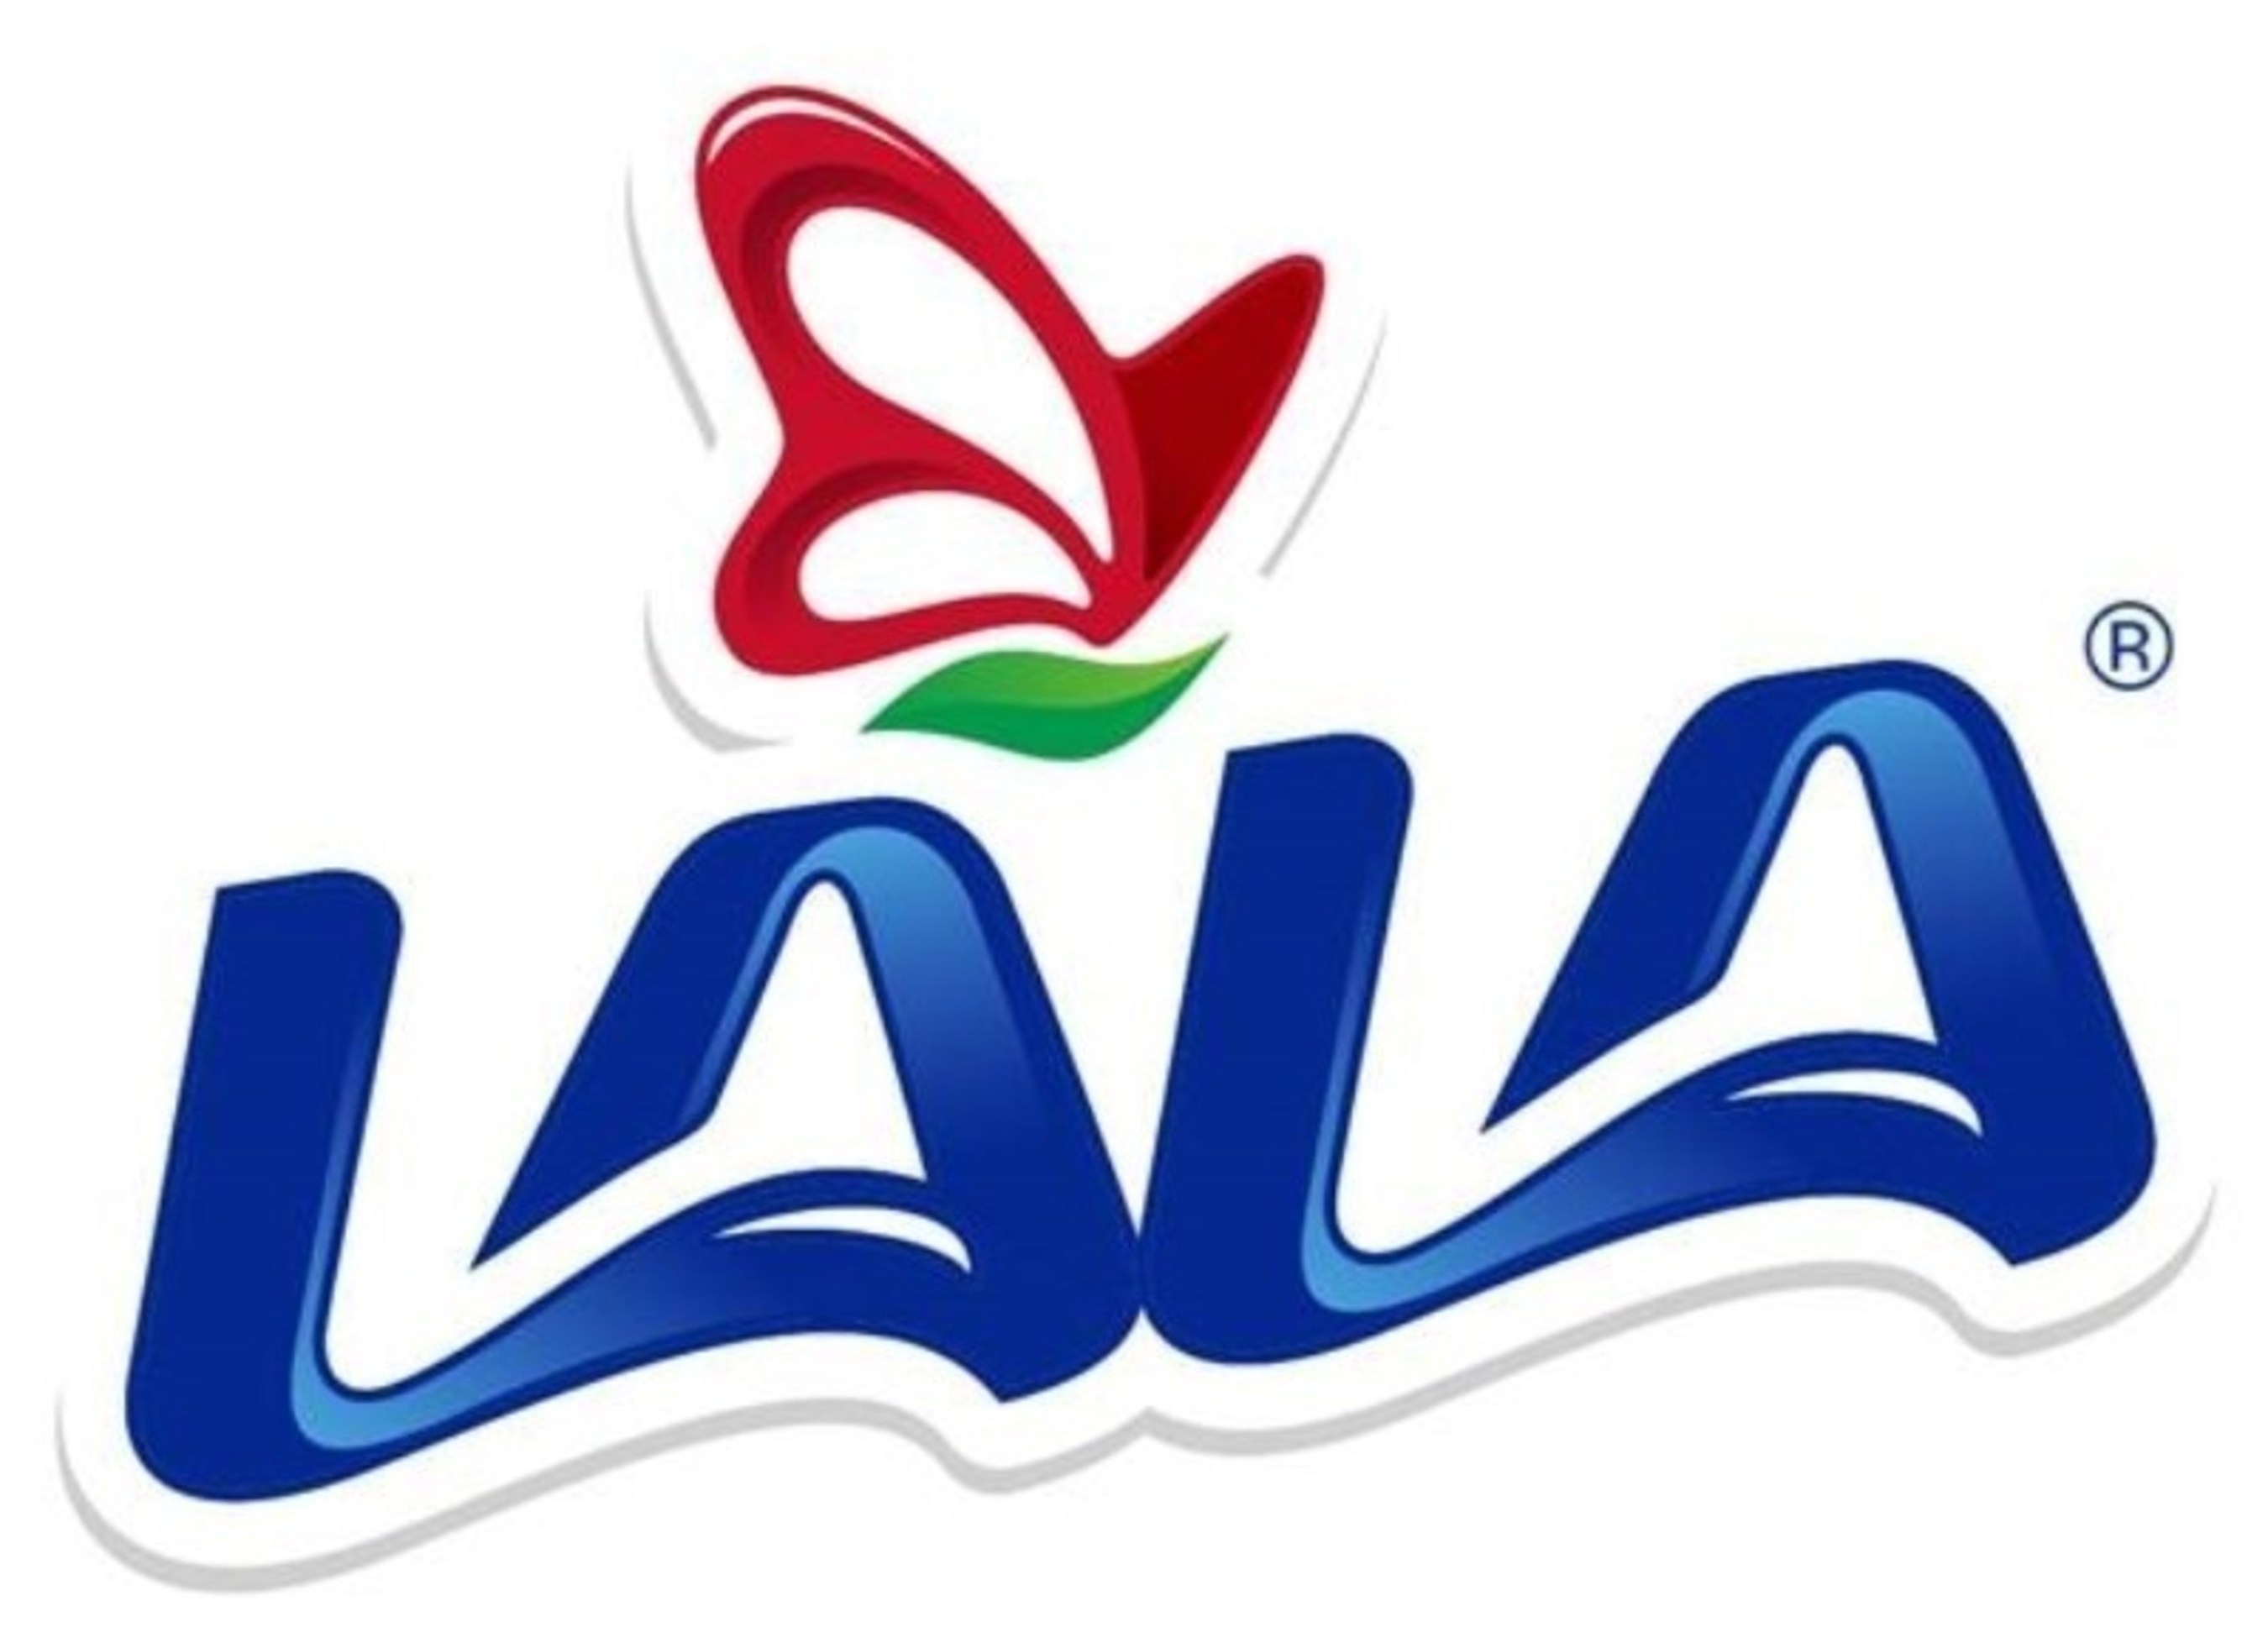 Lala Brand Logo